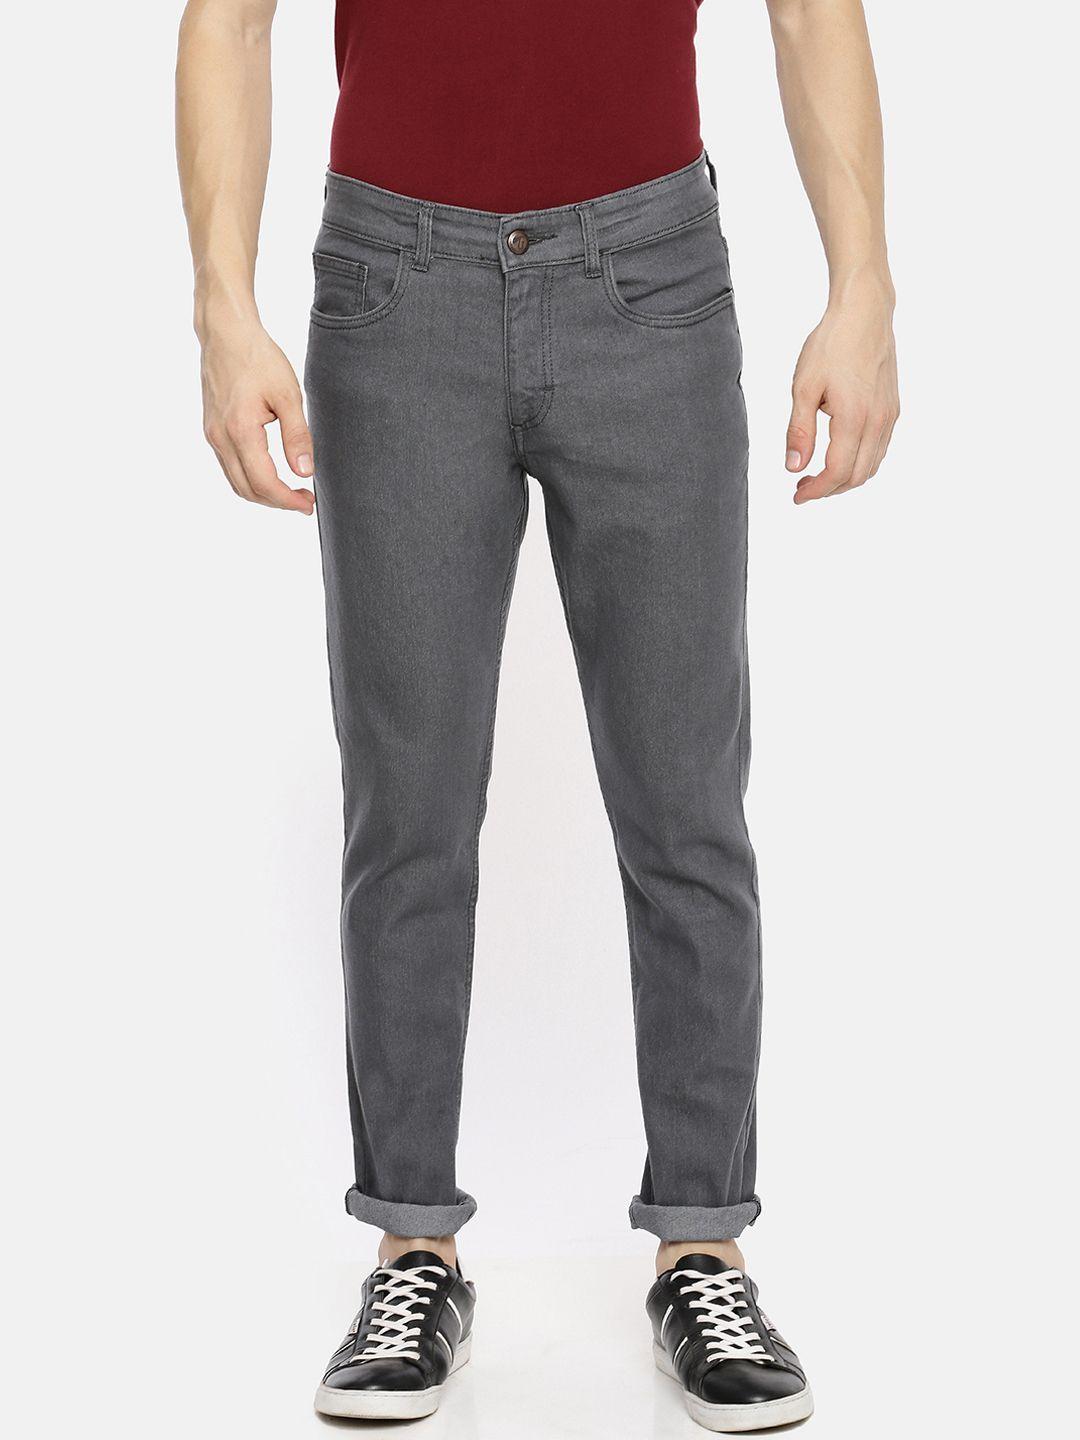 The Indian Garage Co Men Grey Slim Fit Stretchable Jeans